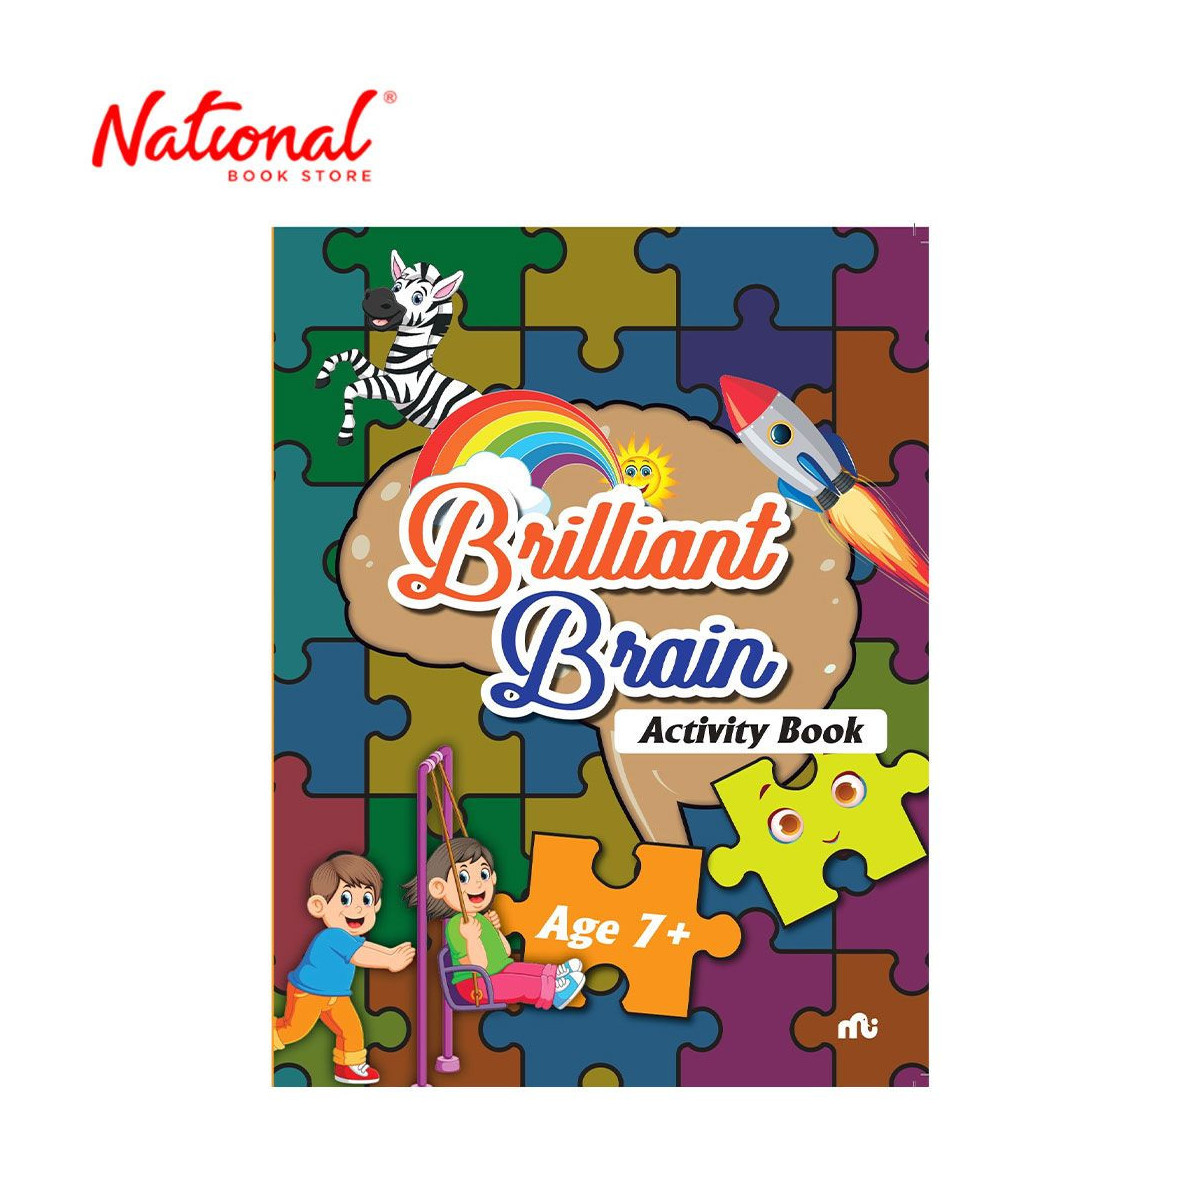 Brilliant Brain Activities Book Age 7+ - Trade Paperback - Workbooks for Kids